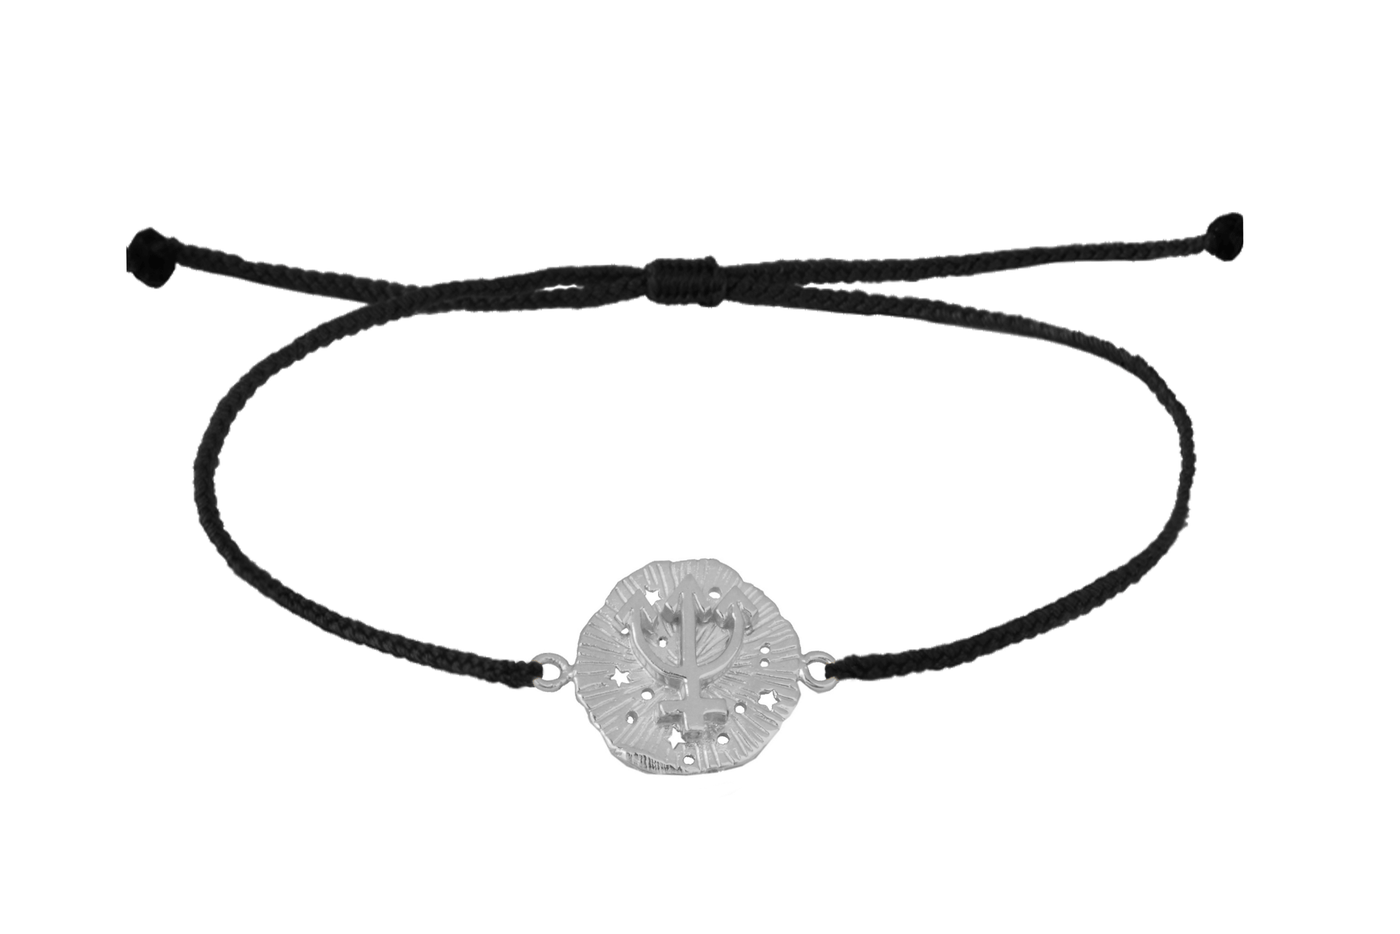 String bracelet with Neptune medallion amulet. Silver